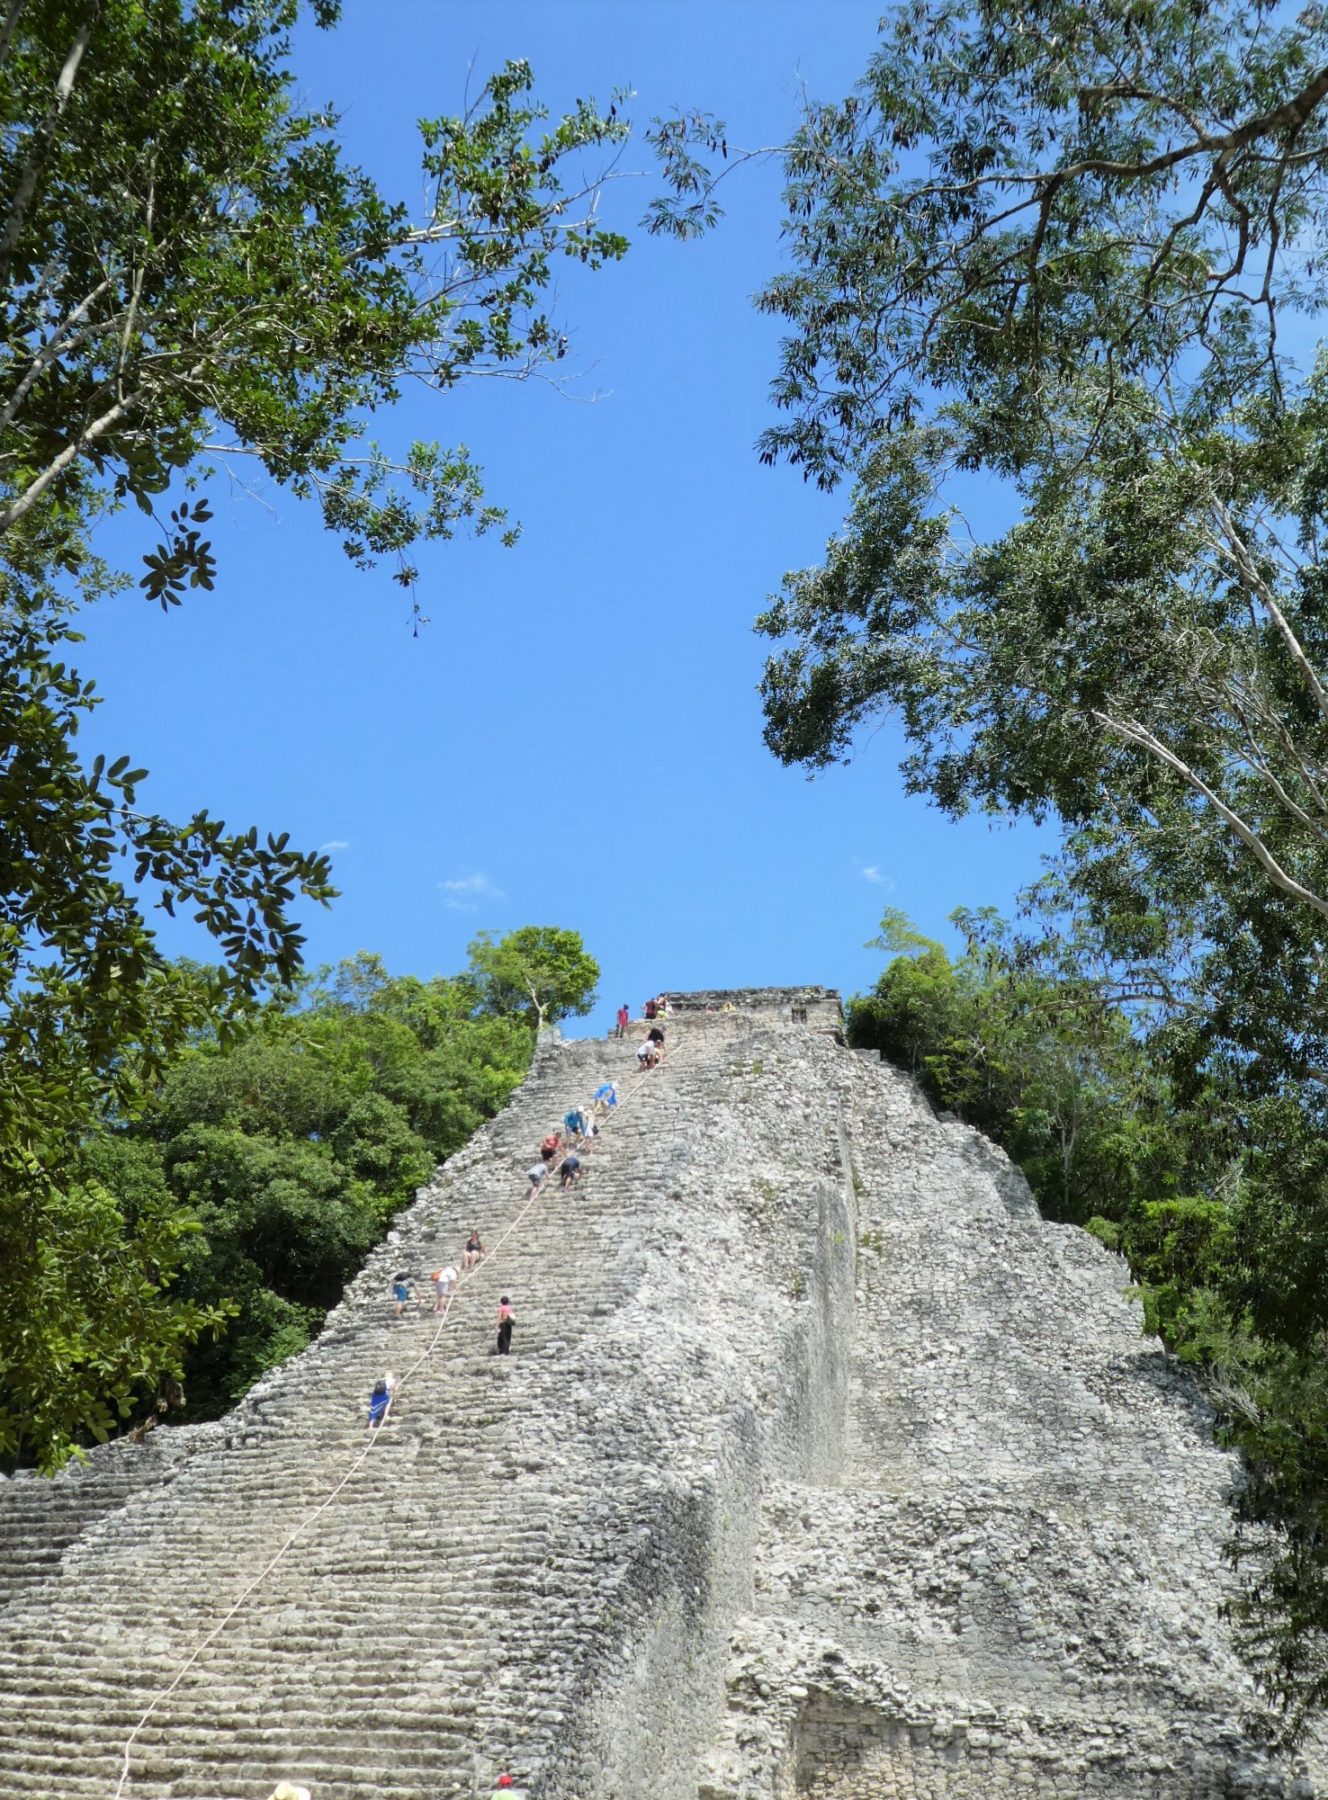 Mexico Coba ruins and pyramid by hesaidorshesaid